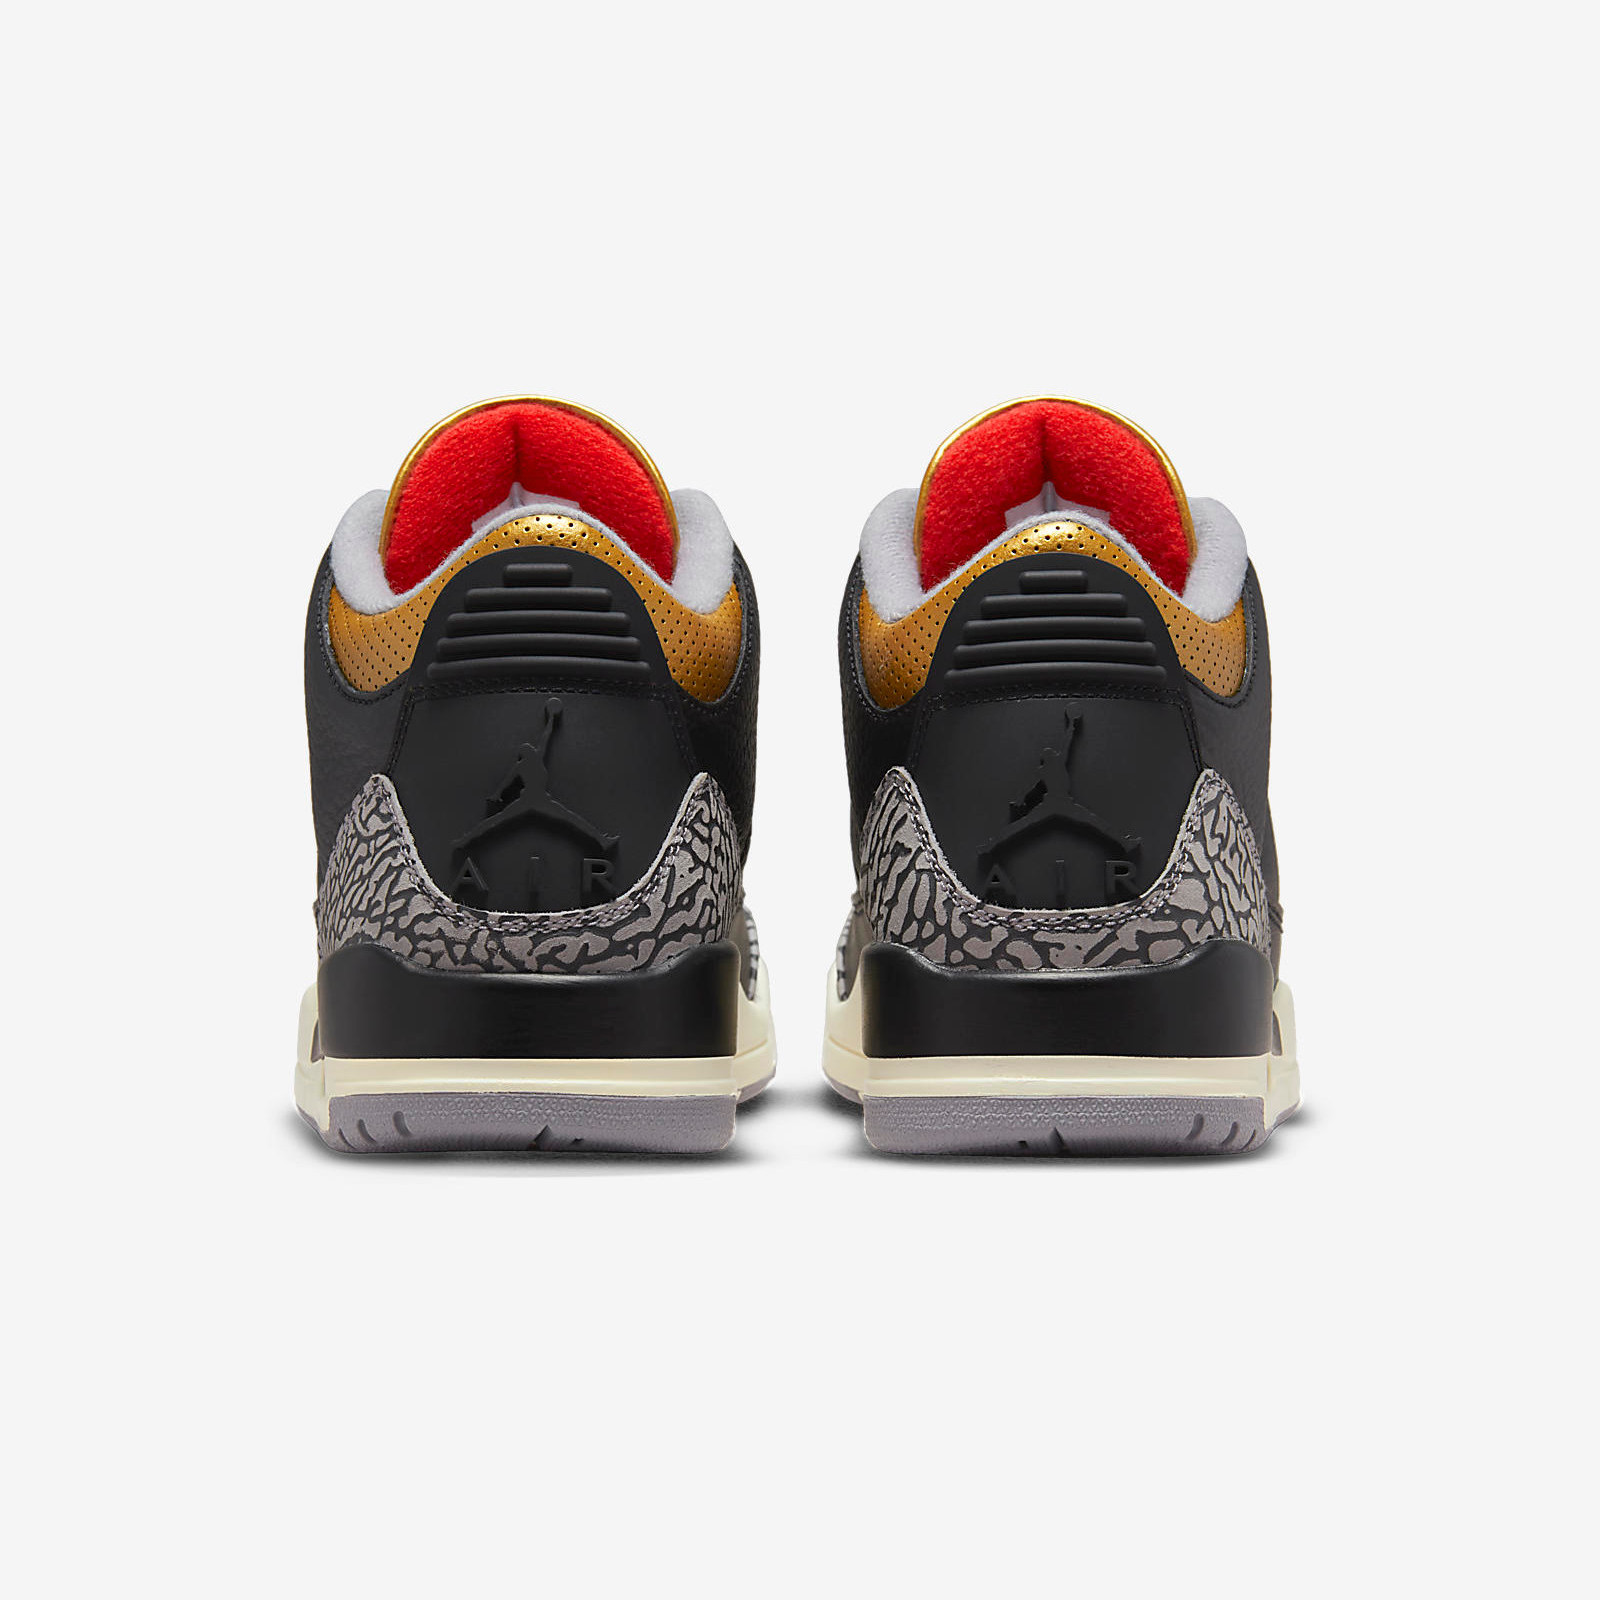 Air Jordan 3 Retro
« Black Gold »